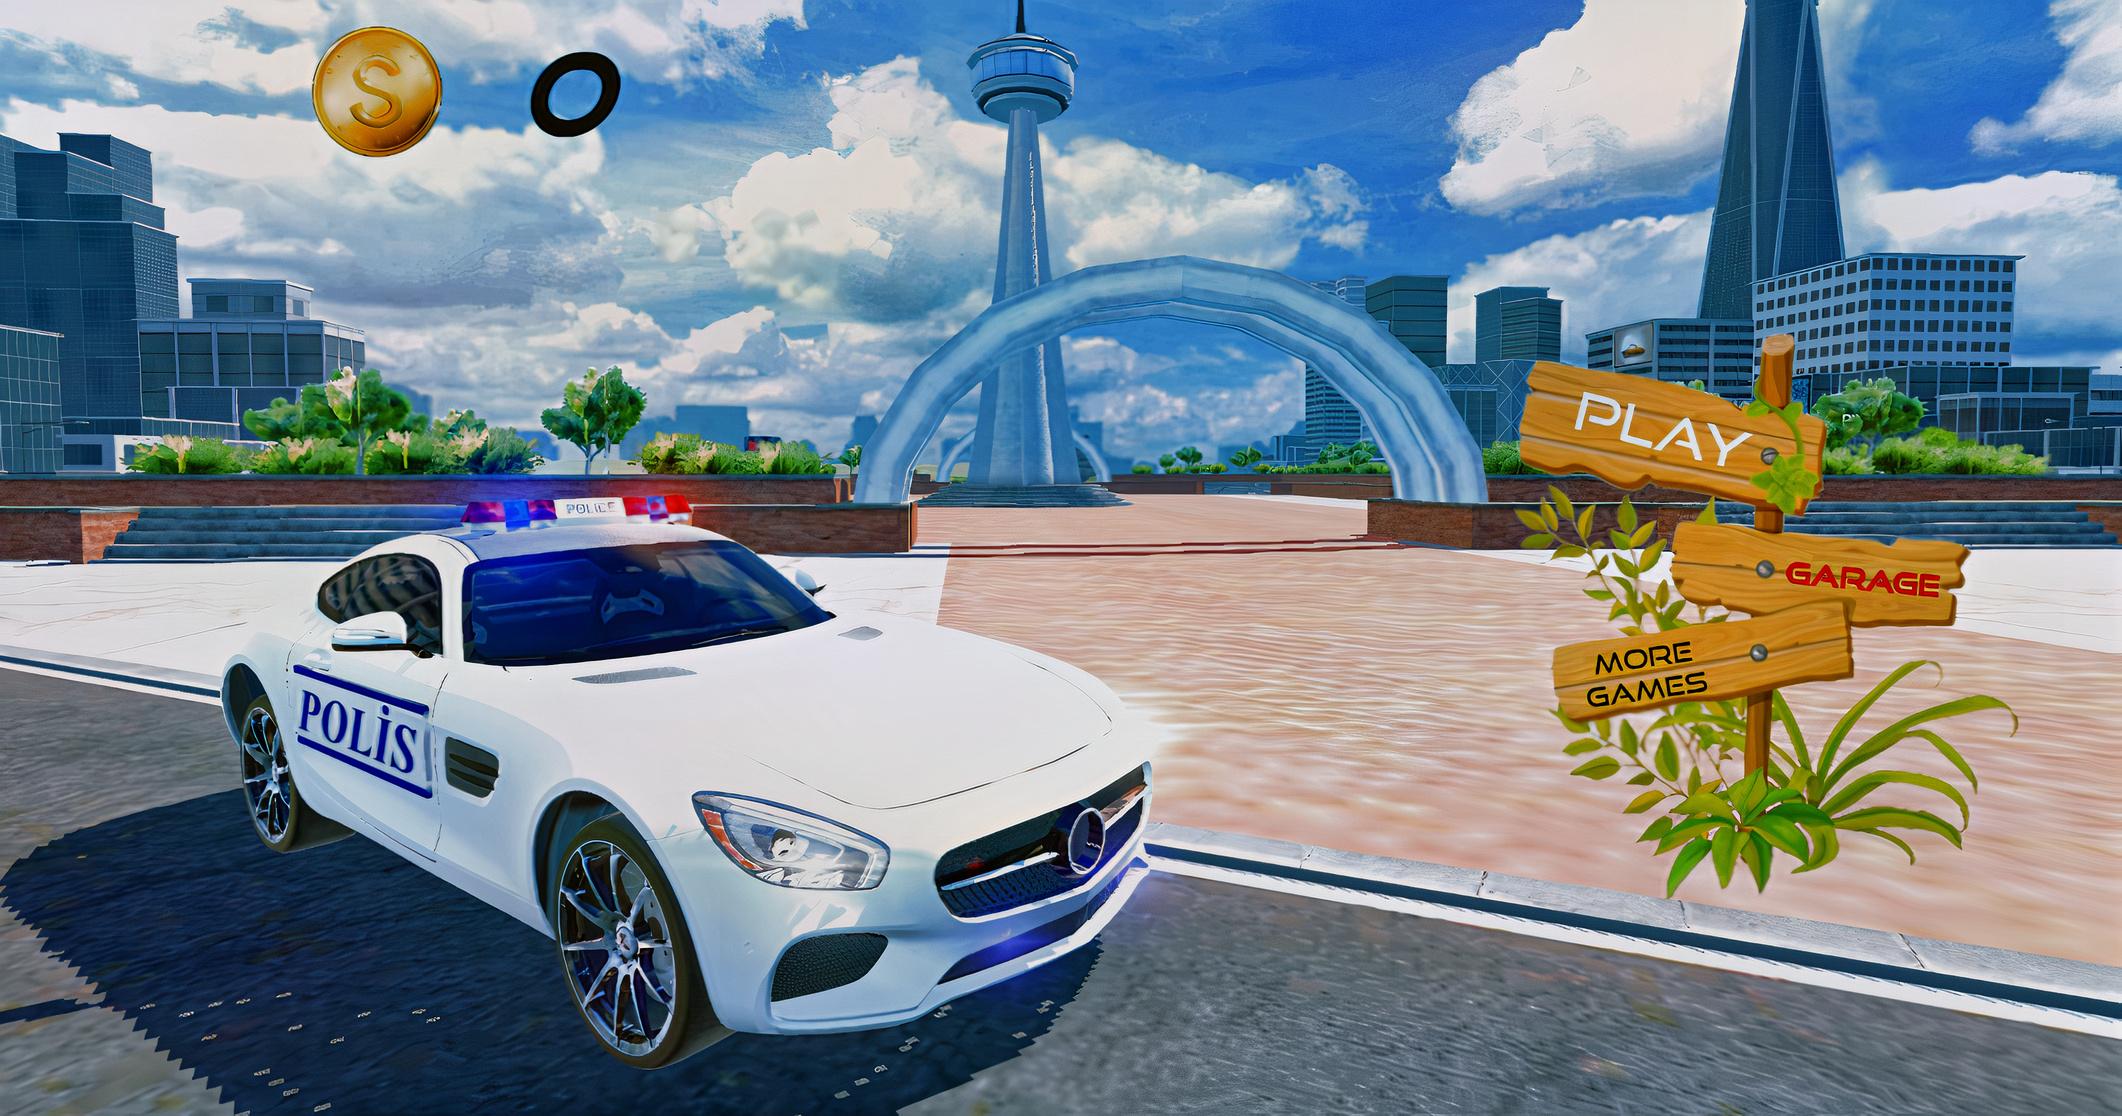 مجداف يلزم شخص يتعلم حرفة ما  Real 911 Mercedes Police Car Game Simulator 2021 for Android - APK Download